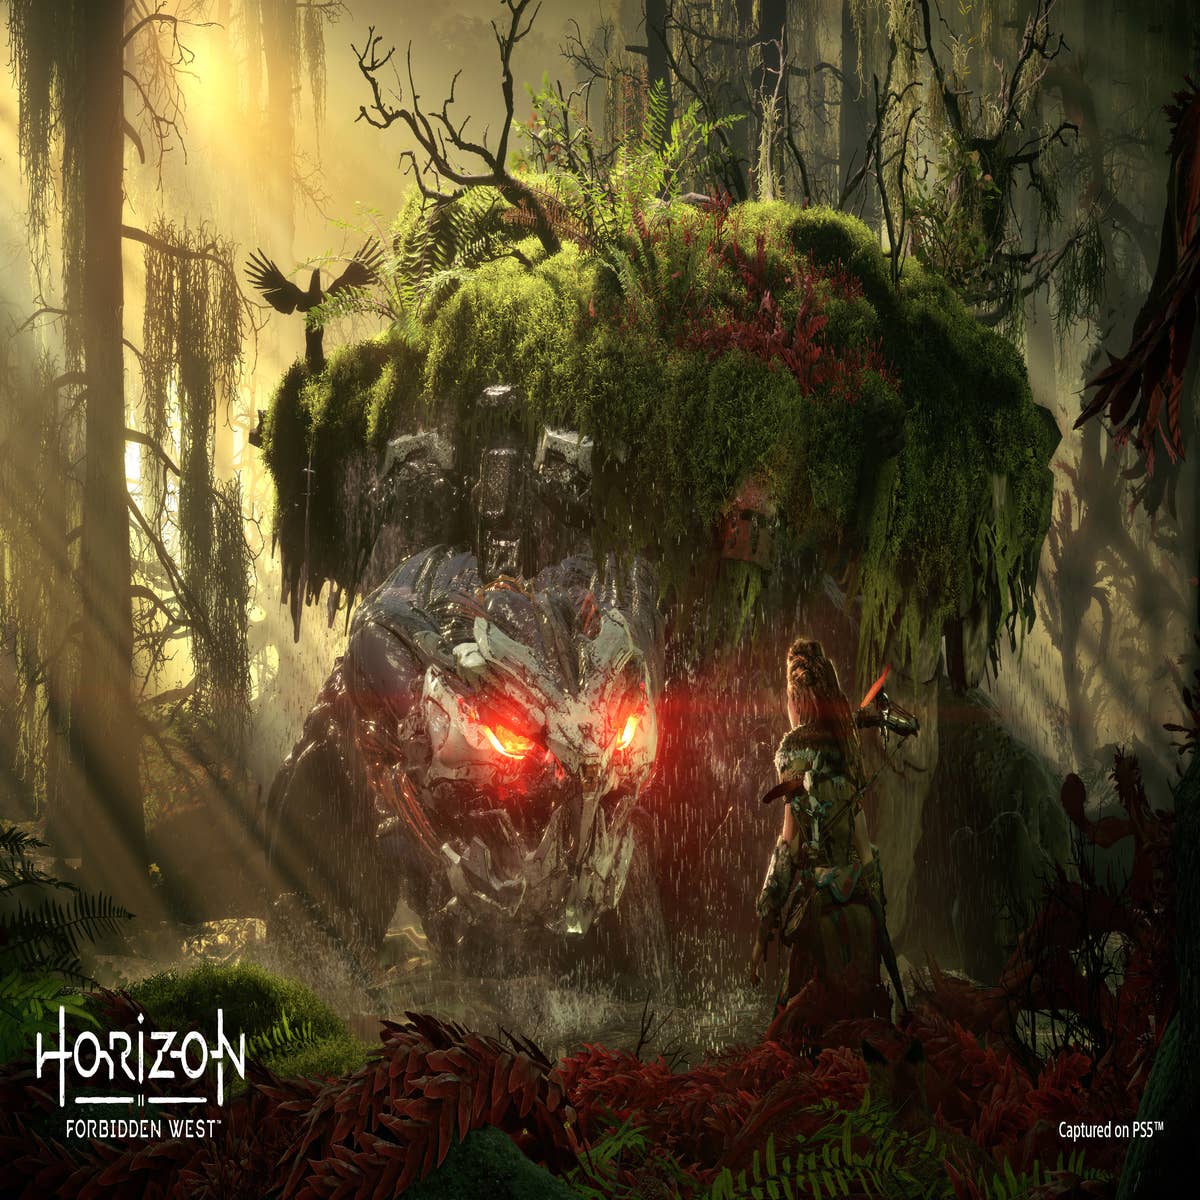 The Horizon Forbidden West PC Release Date Is Soon